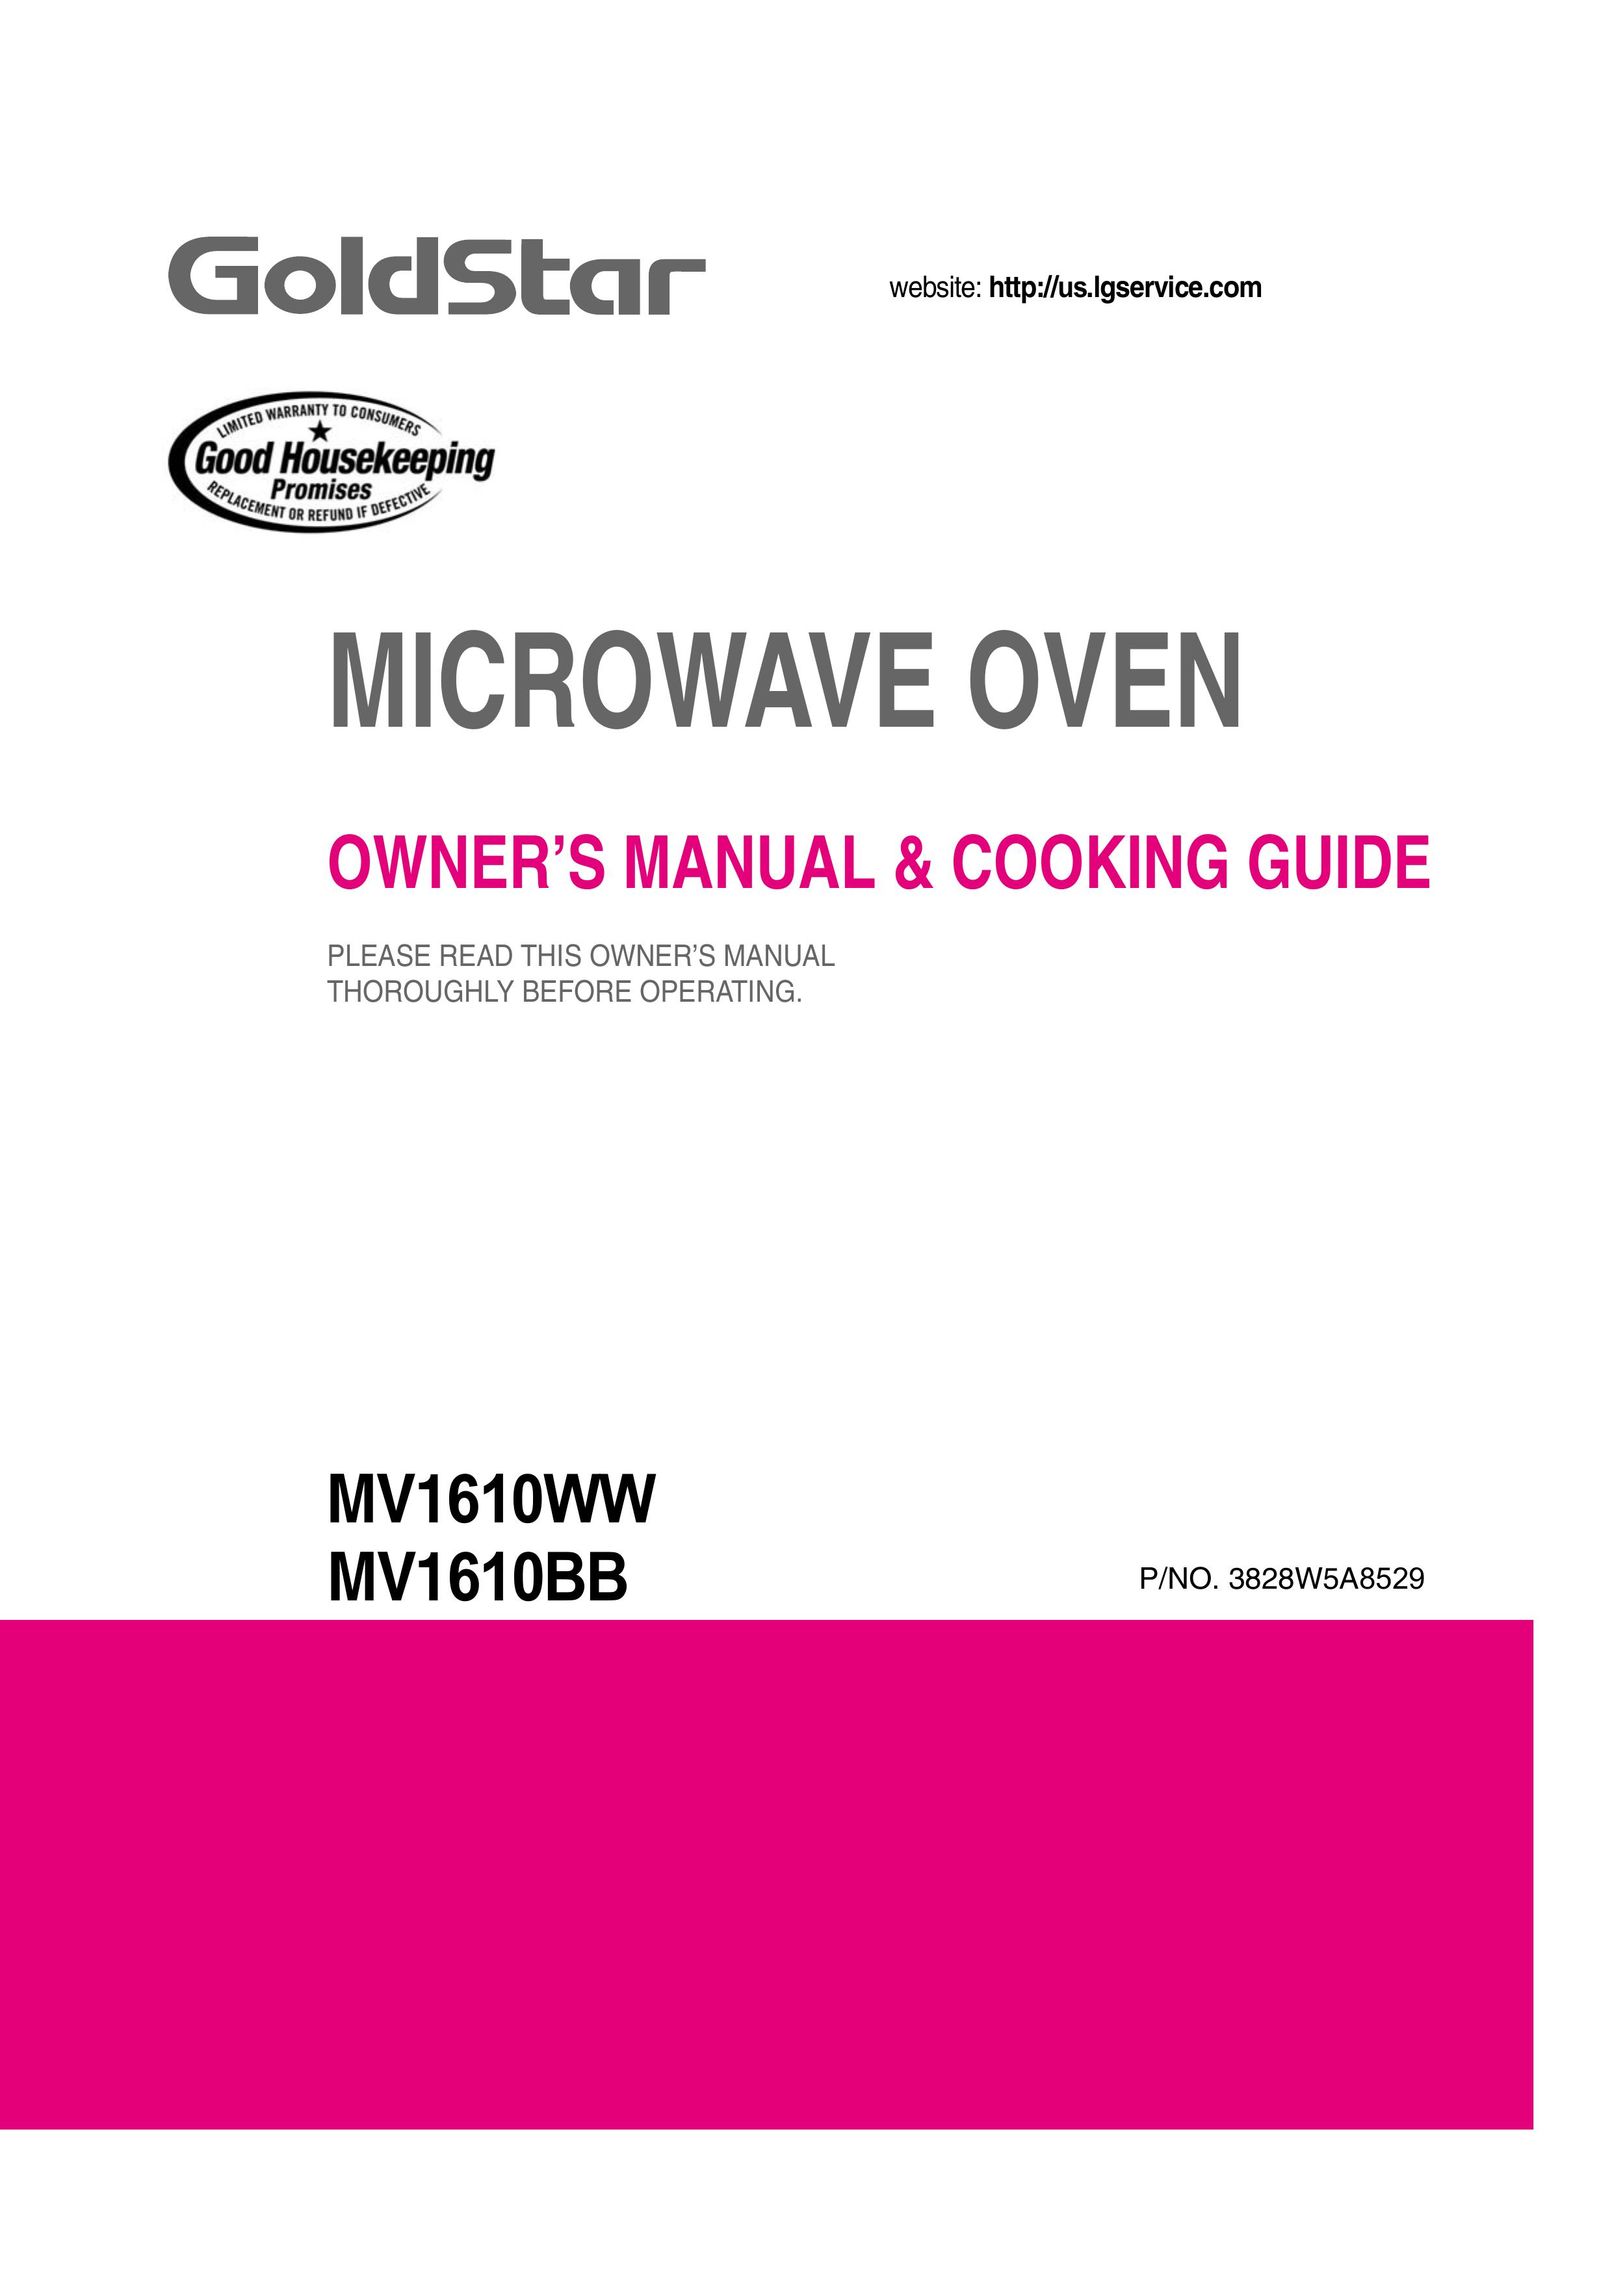 Goldstar MV1610BB Microwave Oven User Manual